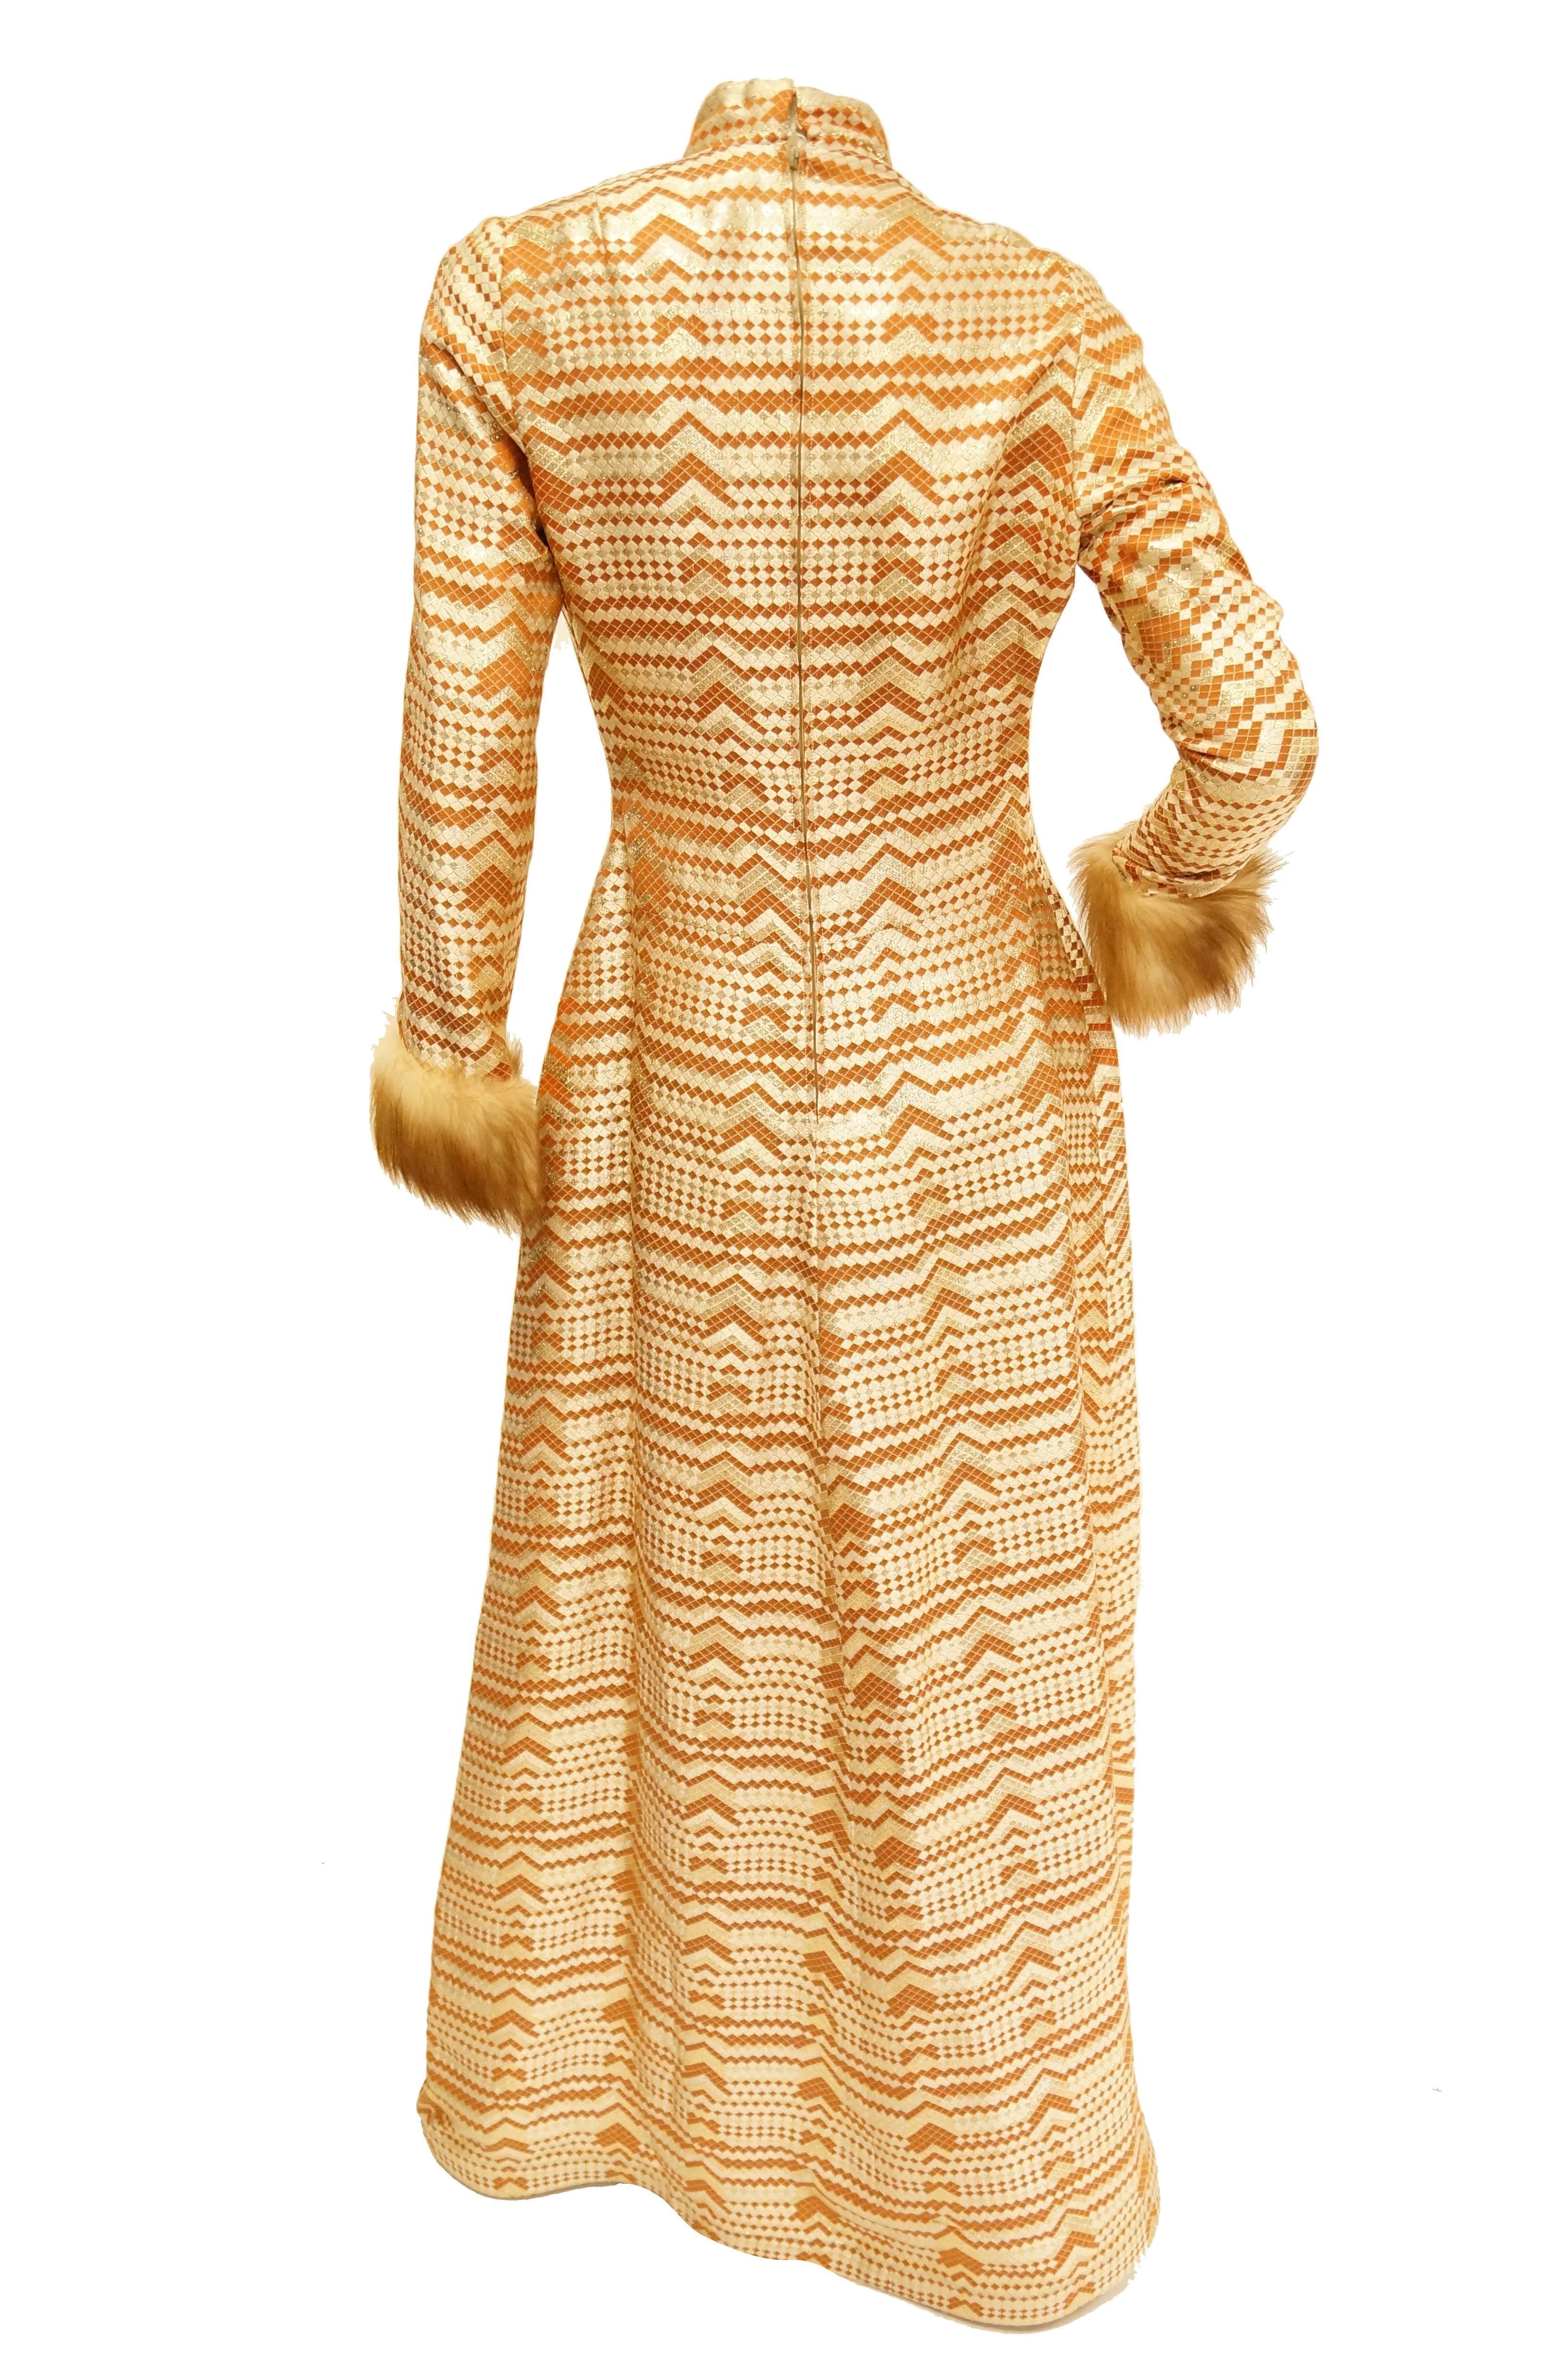 Women's Oscar de la Renta Couture Gold Evening Dress with Fur Cuffs, 1970s 